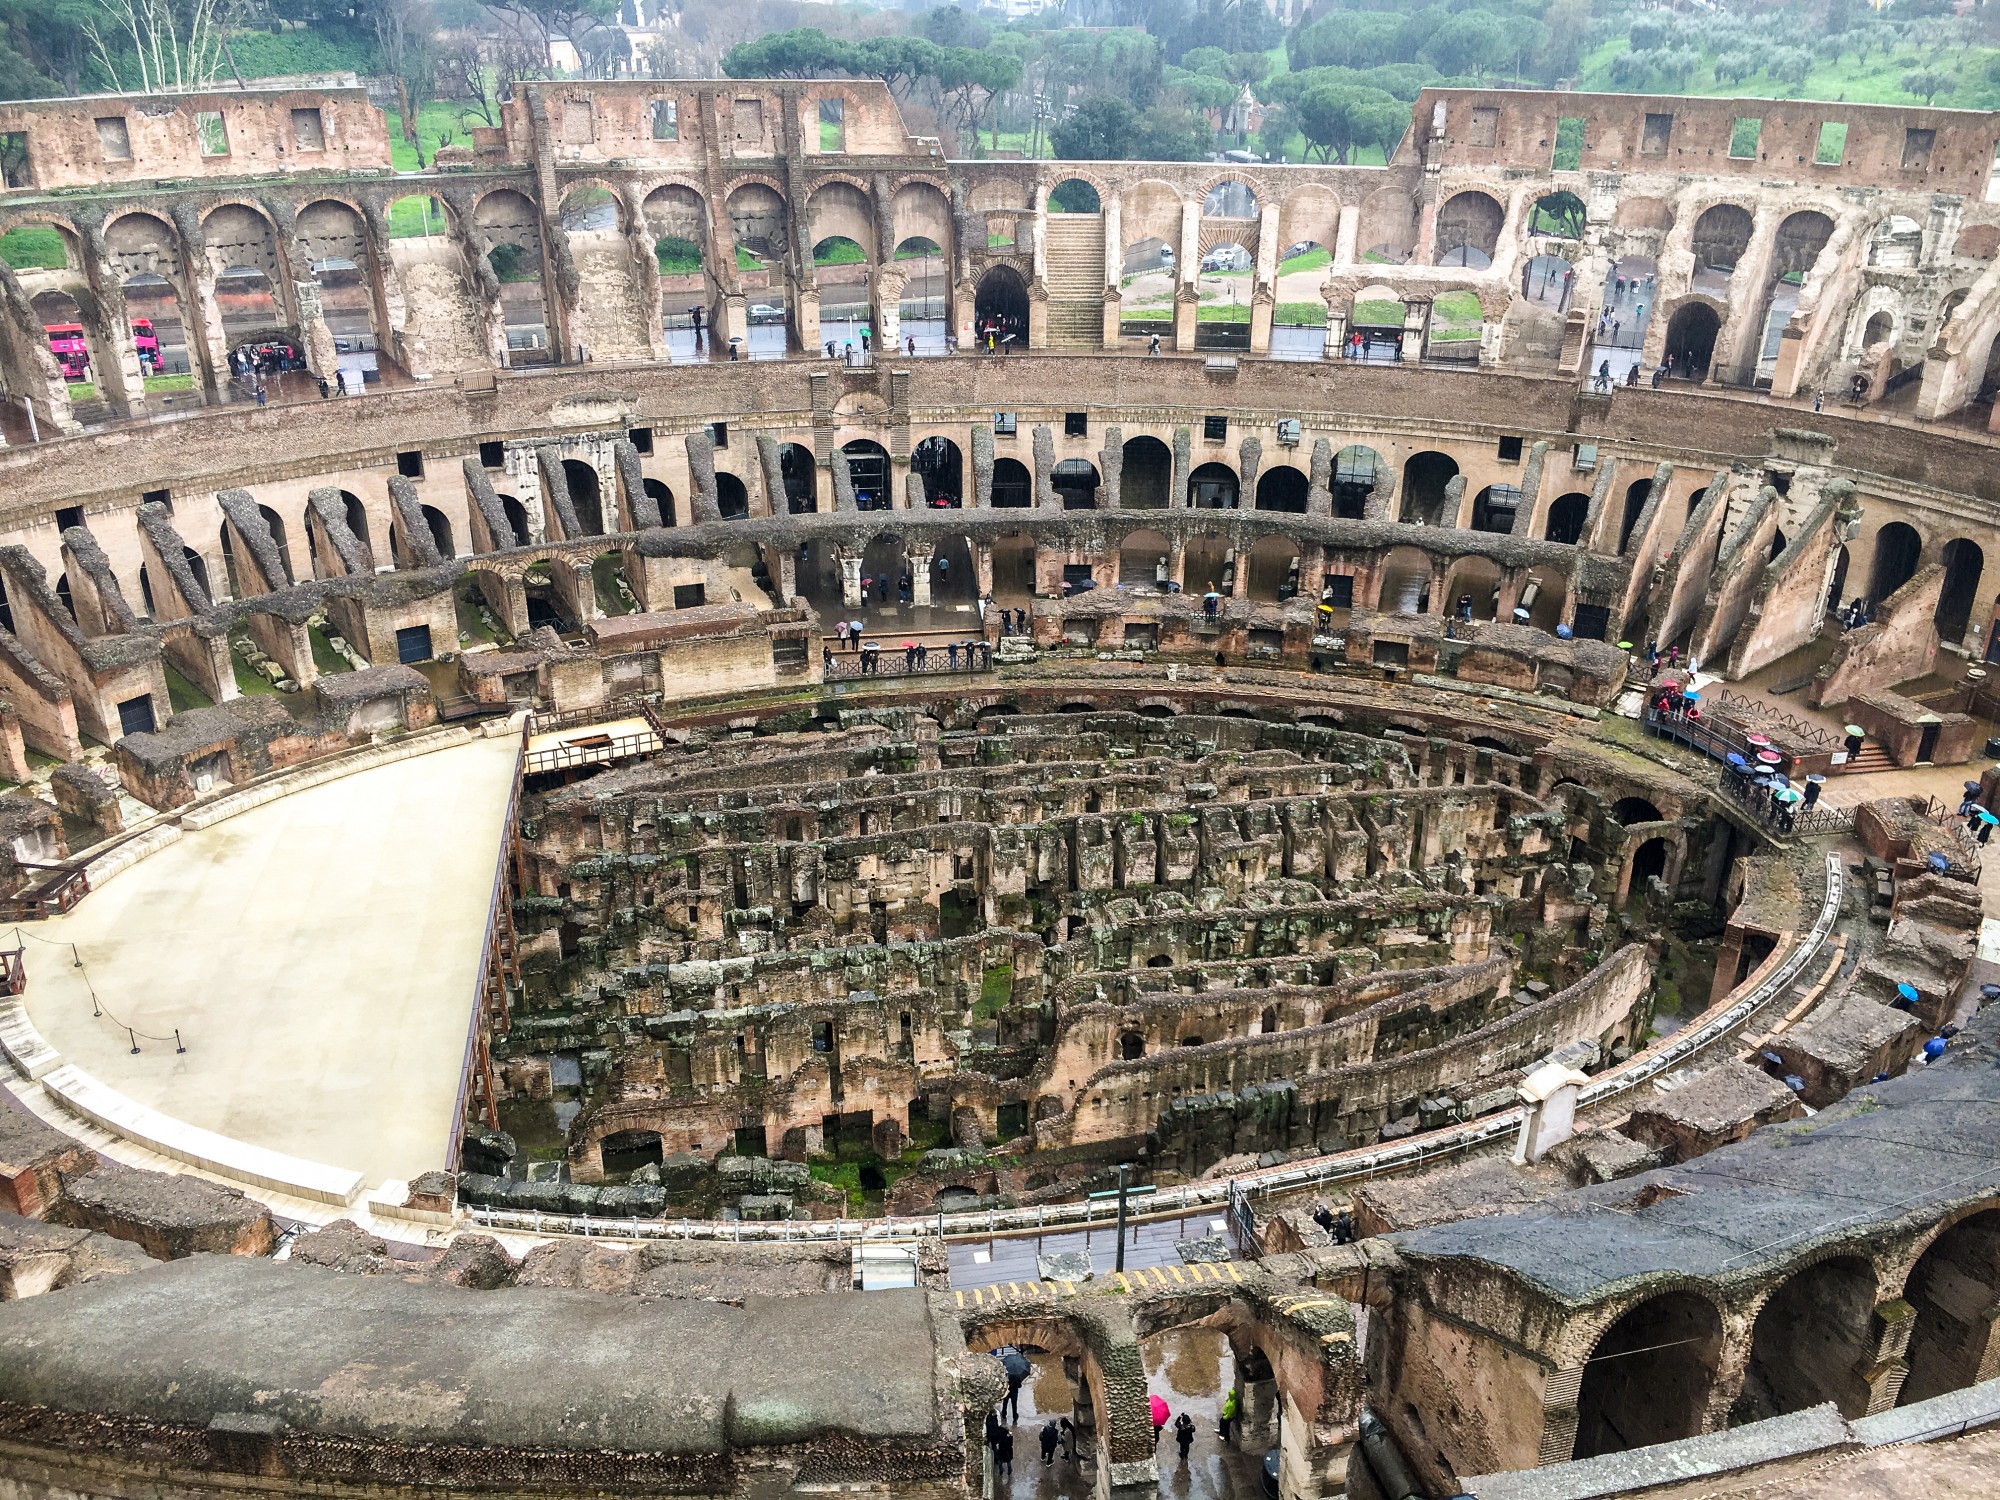 The Colosseum Third Tier